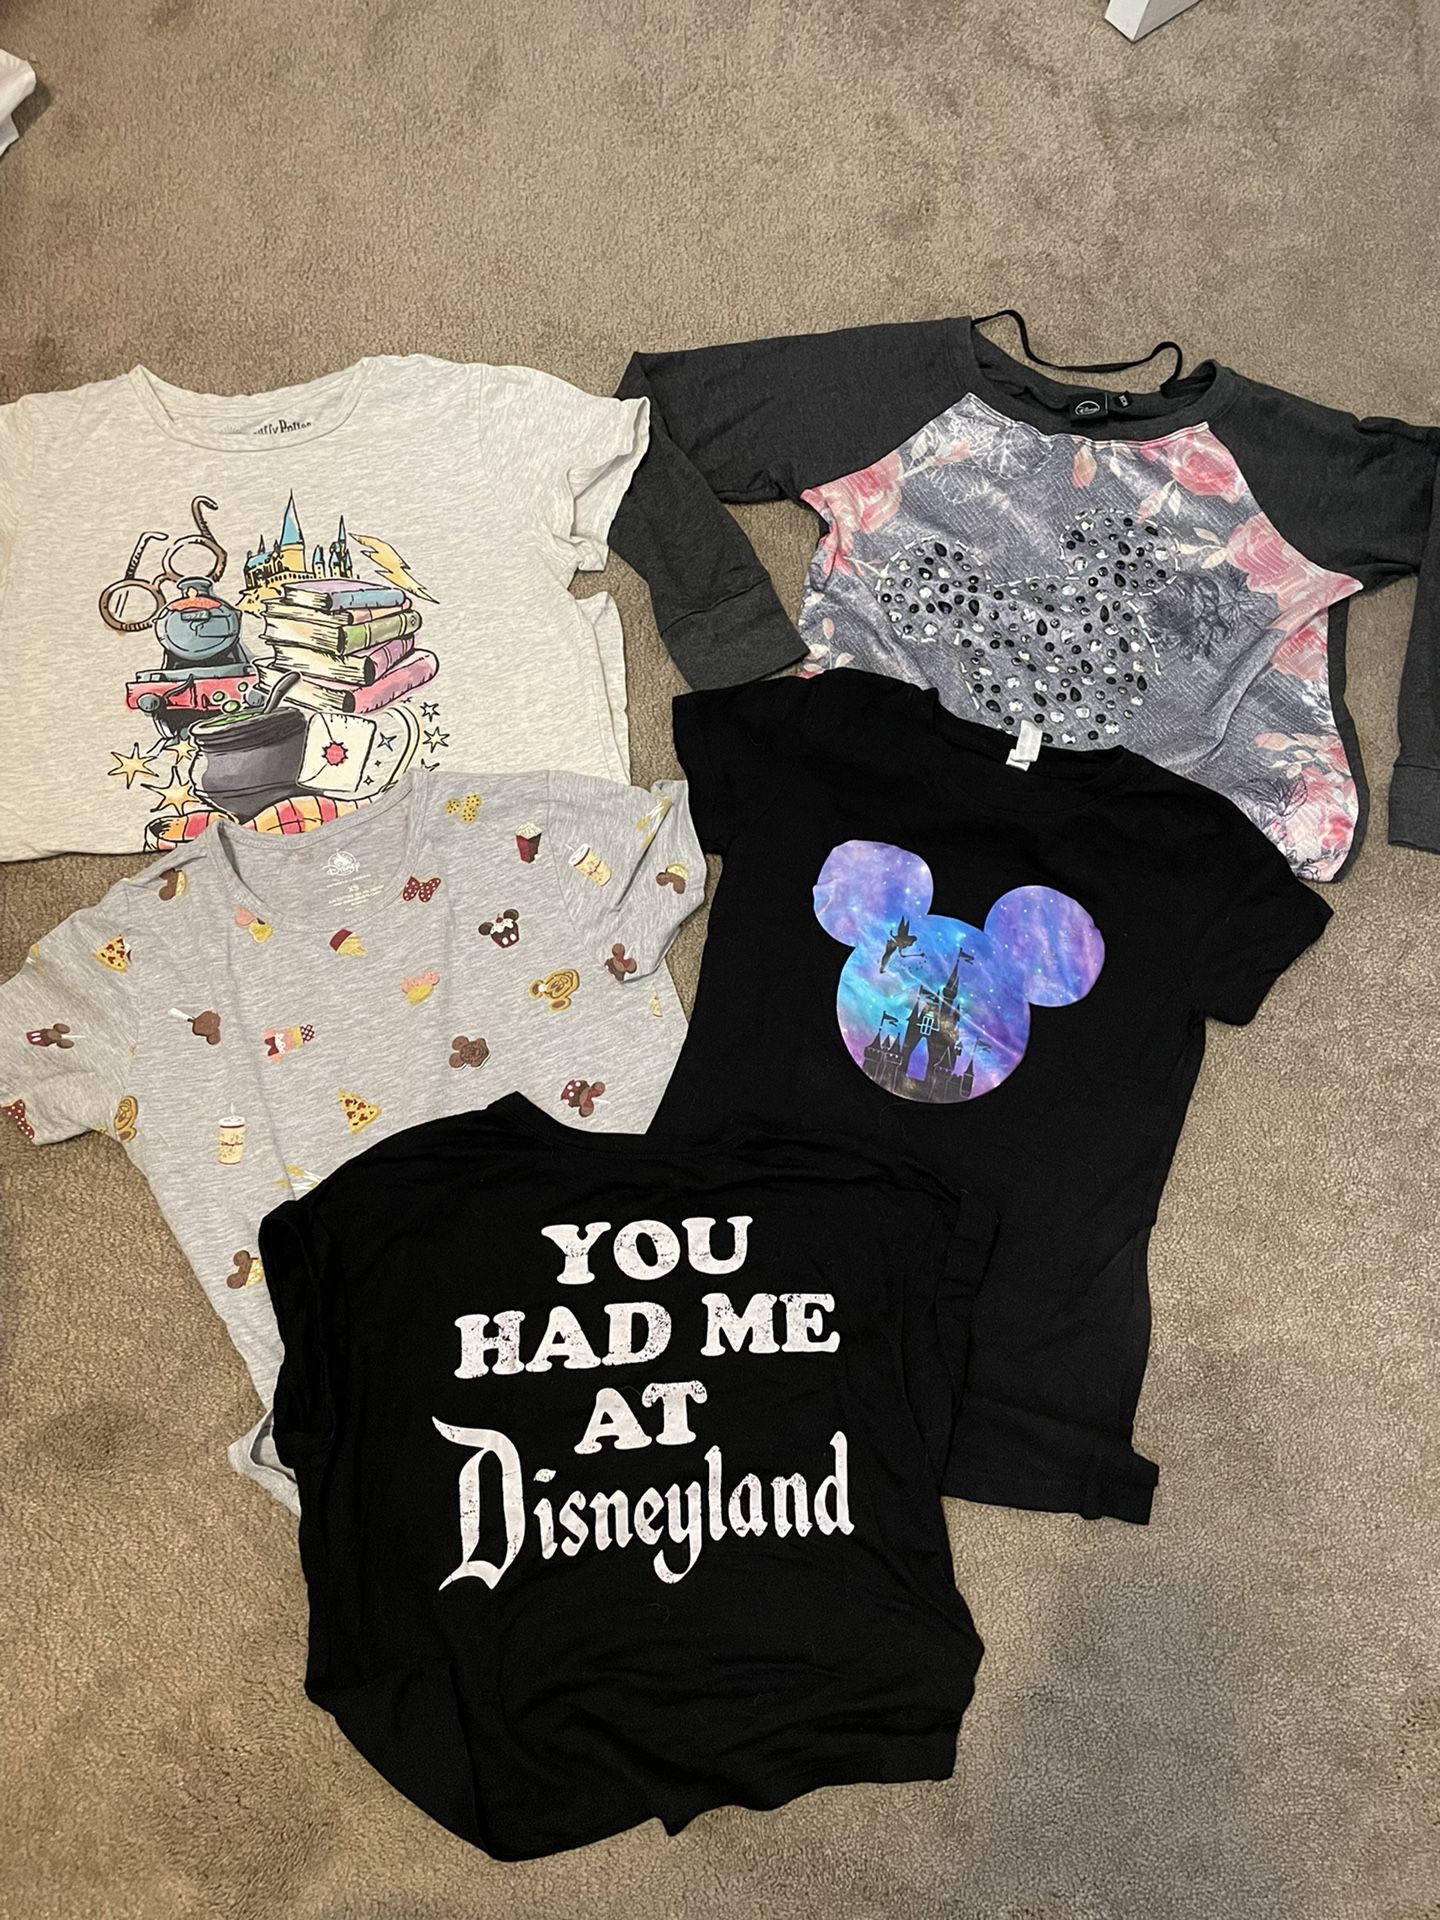 Five women’s Disney T-shirts